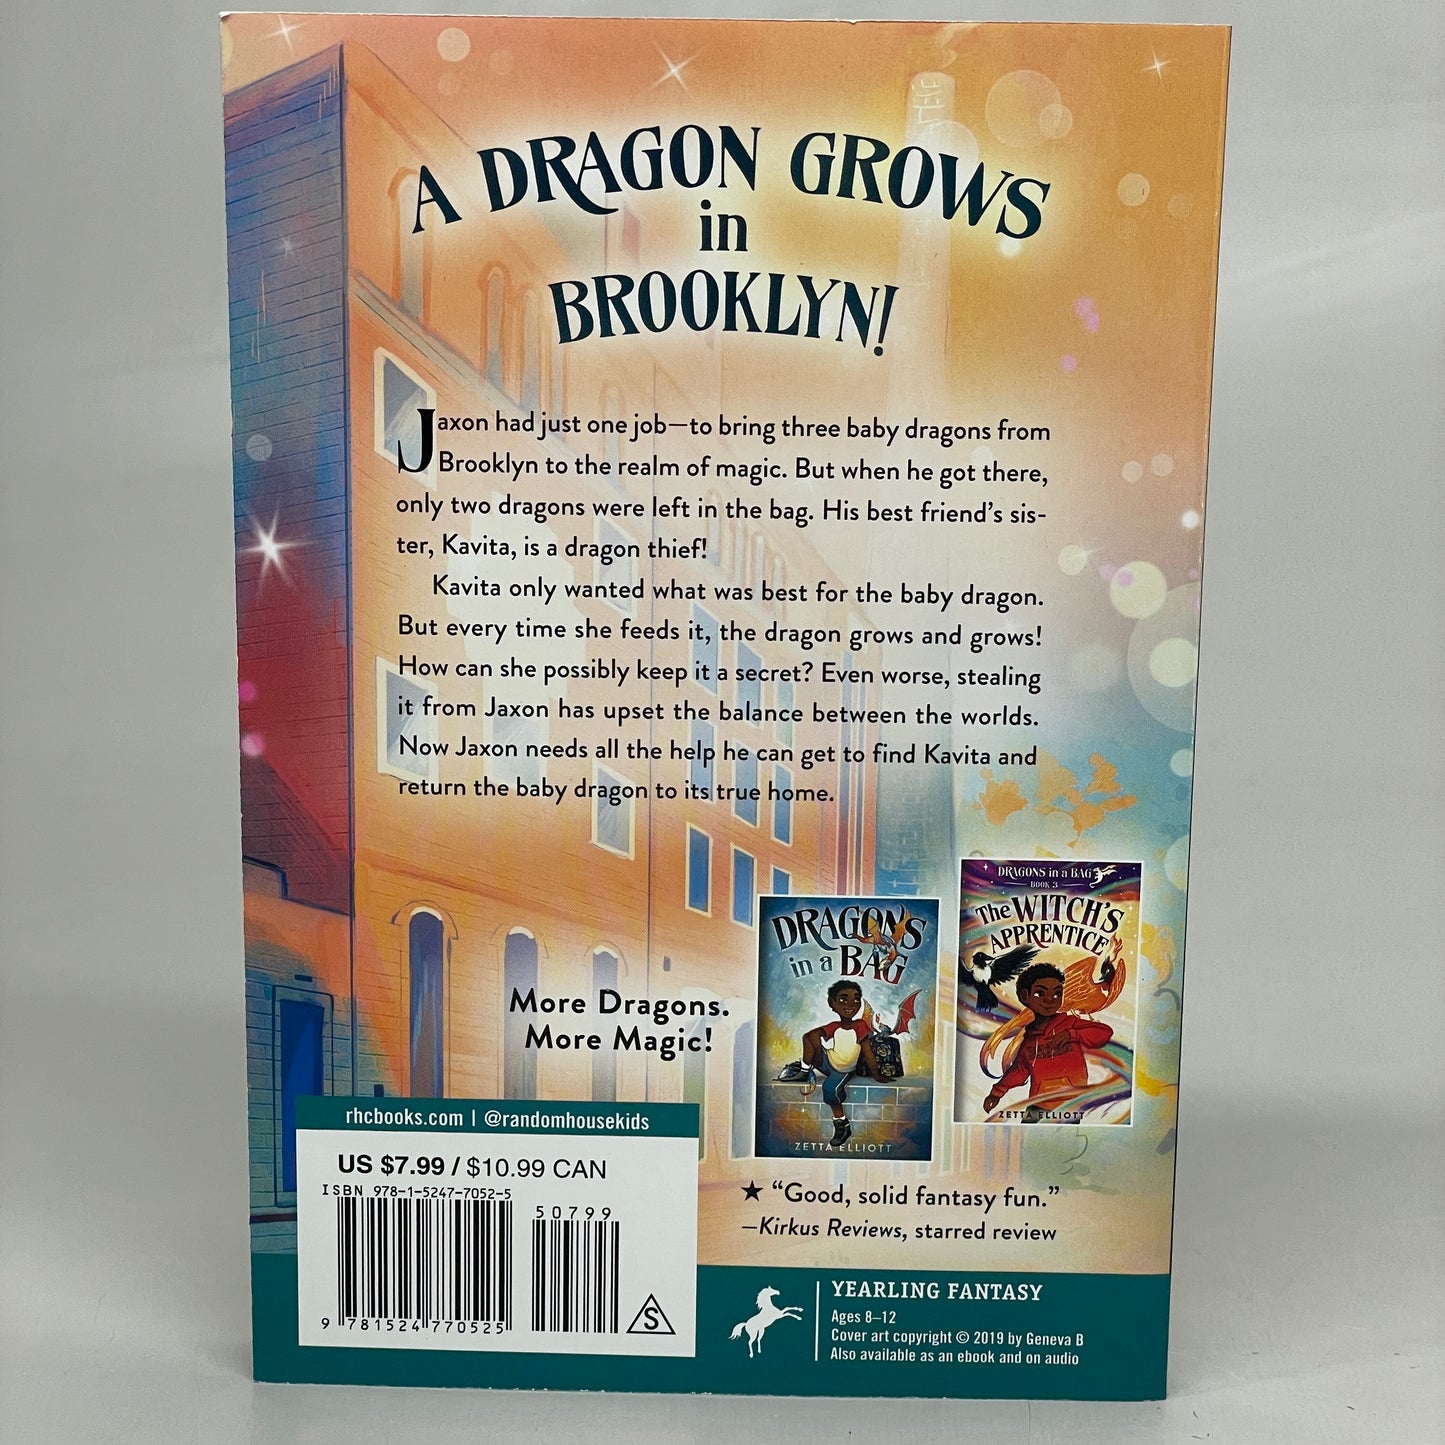 DRAGONS IN A BAG: THE DRAGON THIEF (2 Books) Paperback By Zetta Elliott